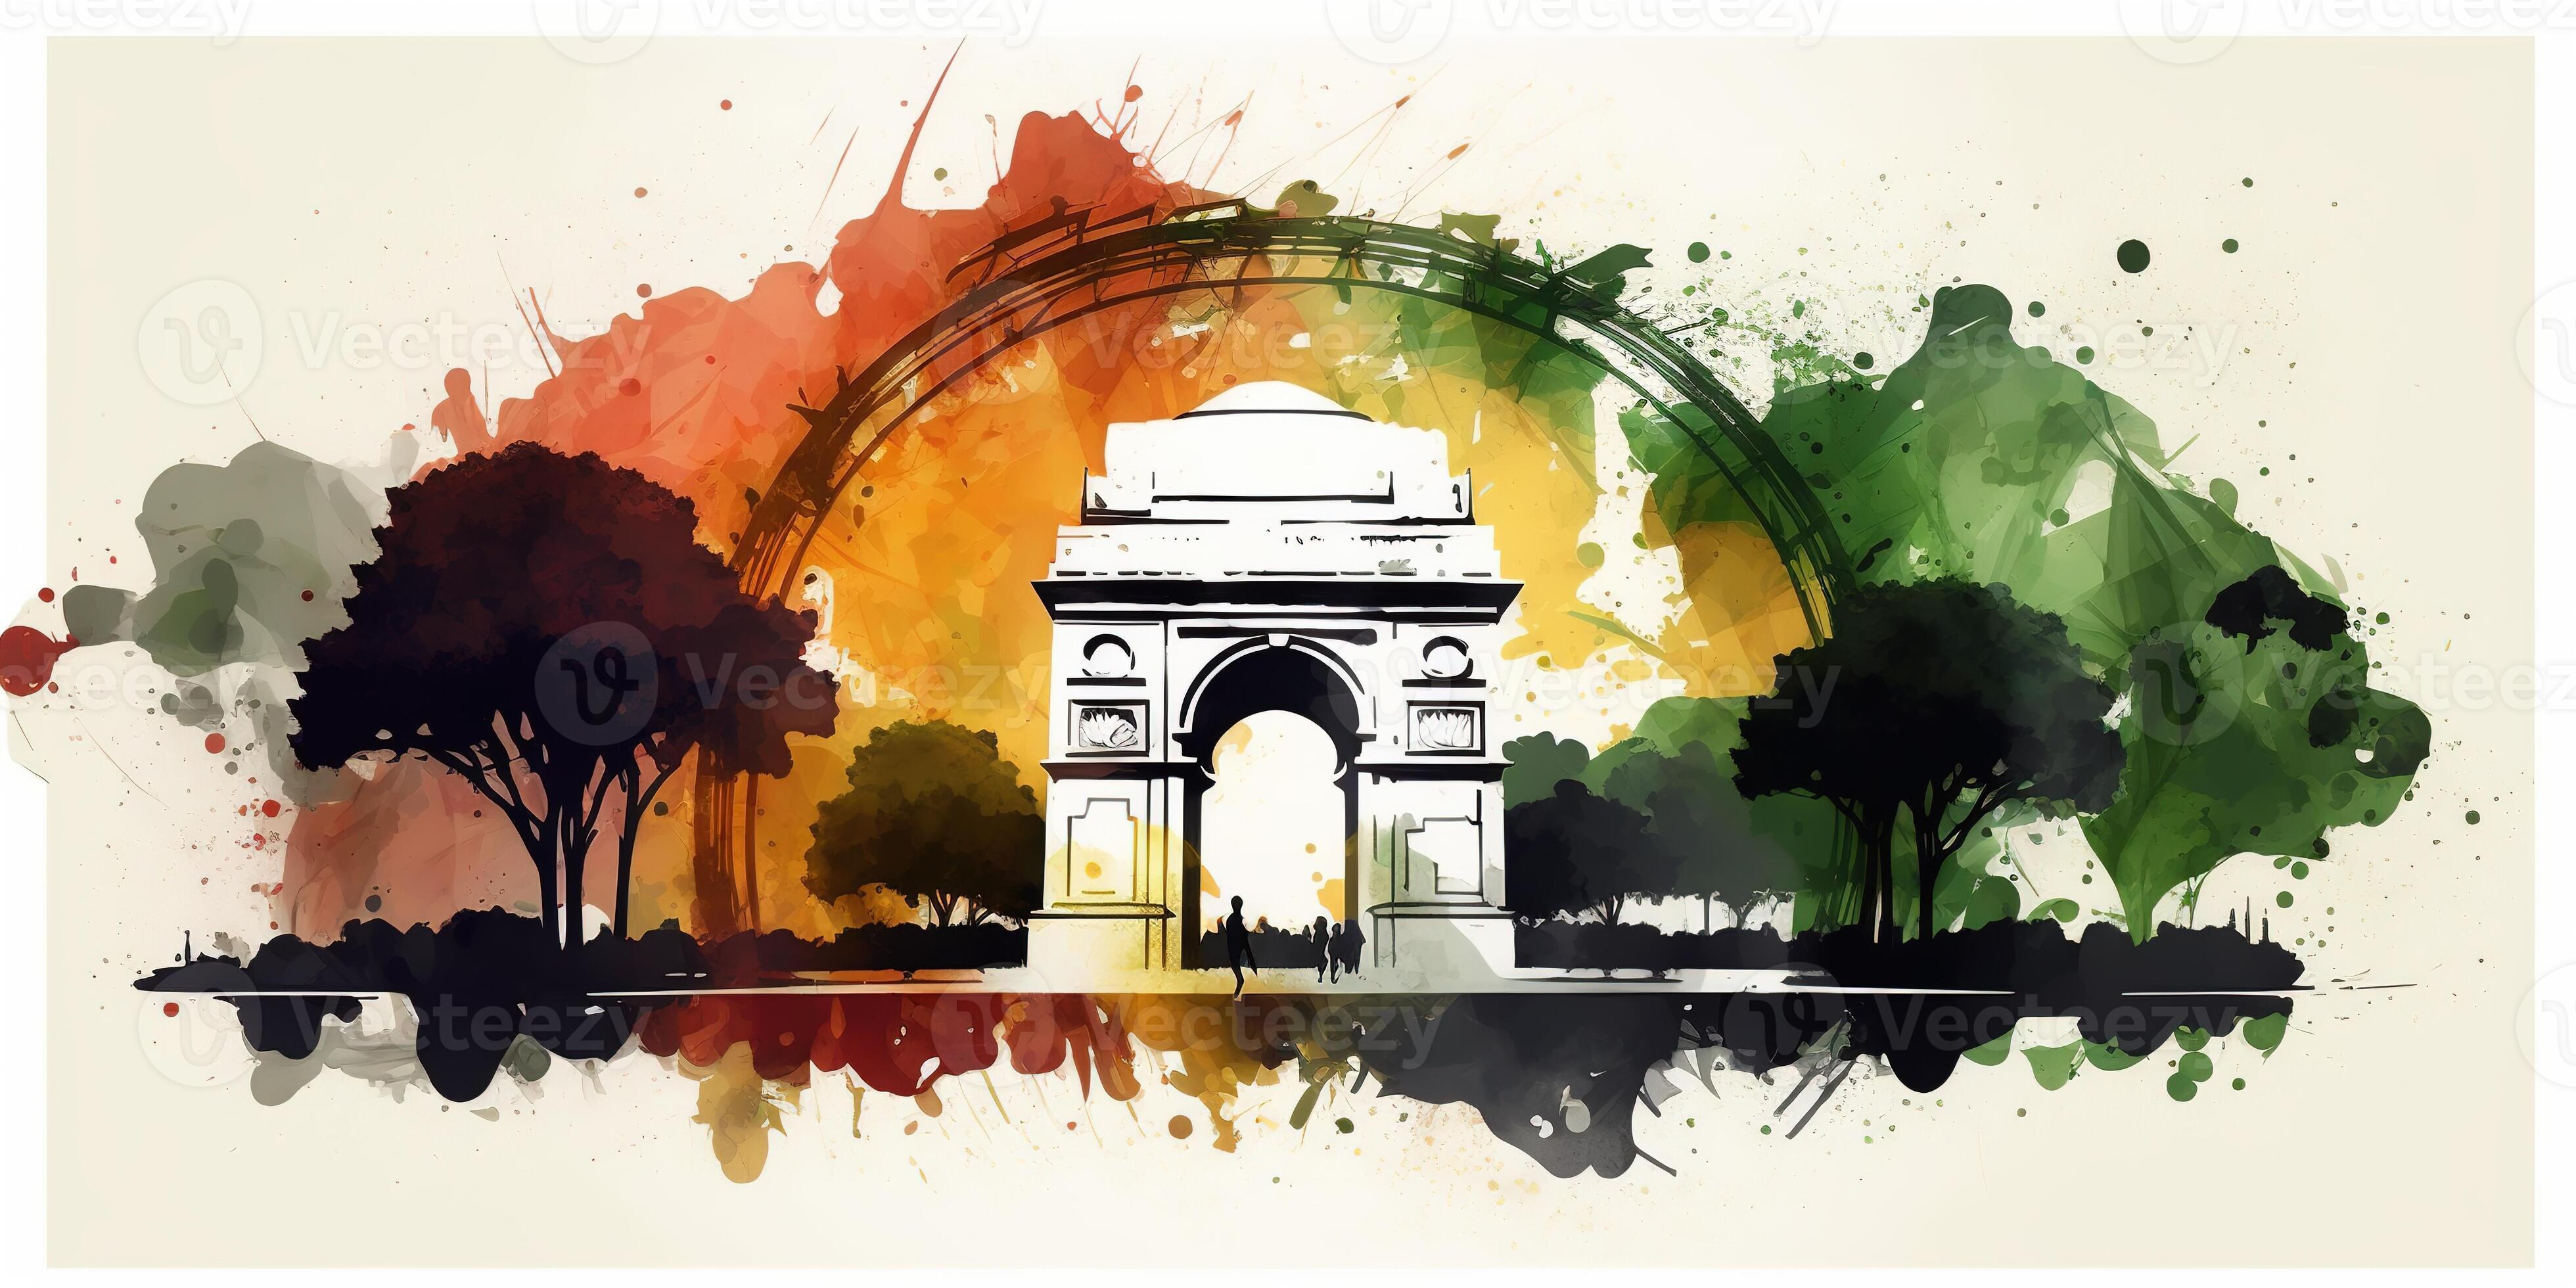 India Gate by Priyanka Sharma on Dribbble